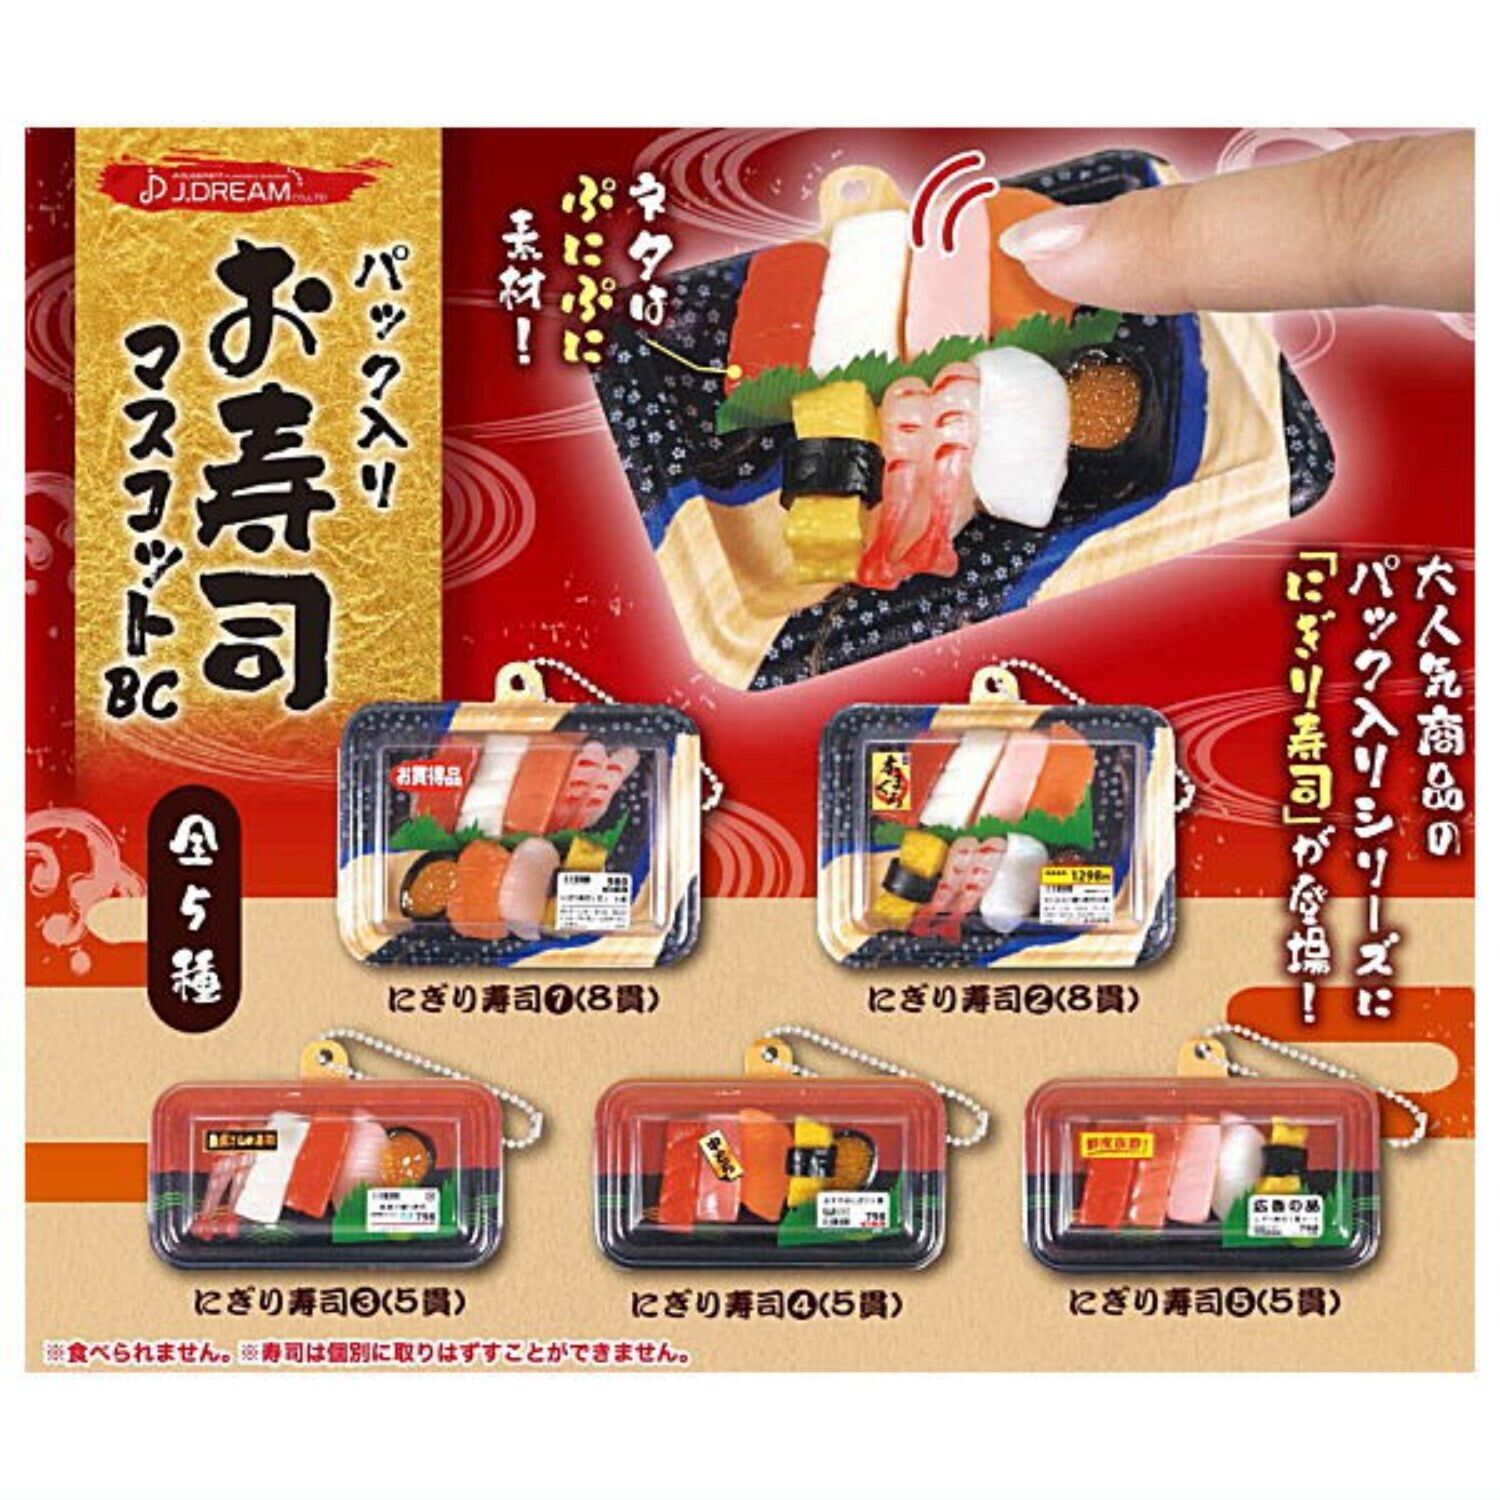 Packed Sushi Mascot Chain Capsule Toy 5 Types Full Comp Set Gacha New Japan